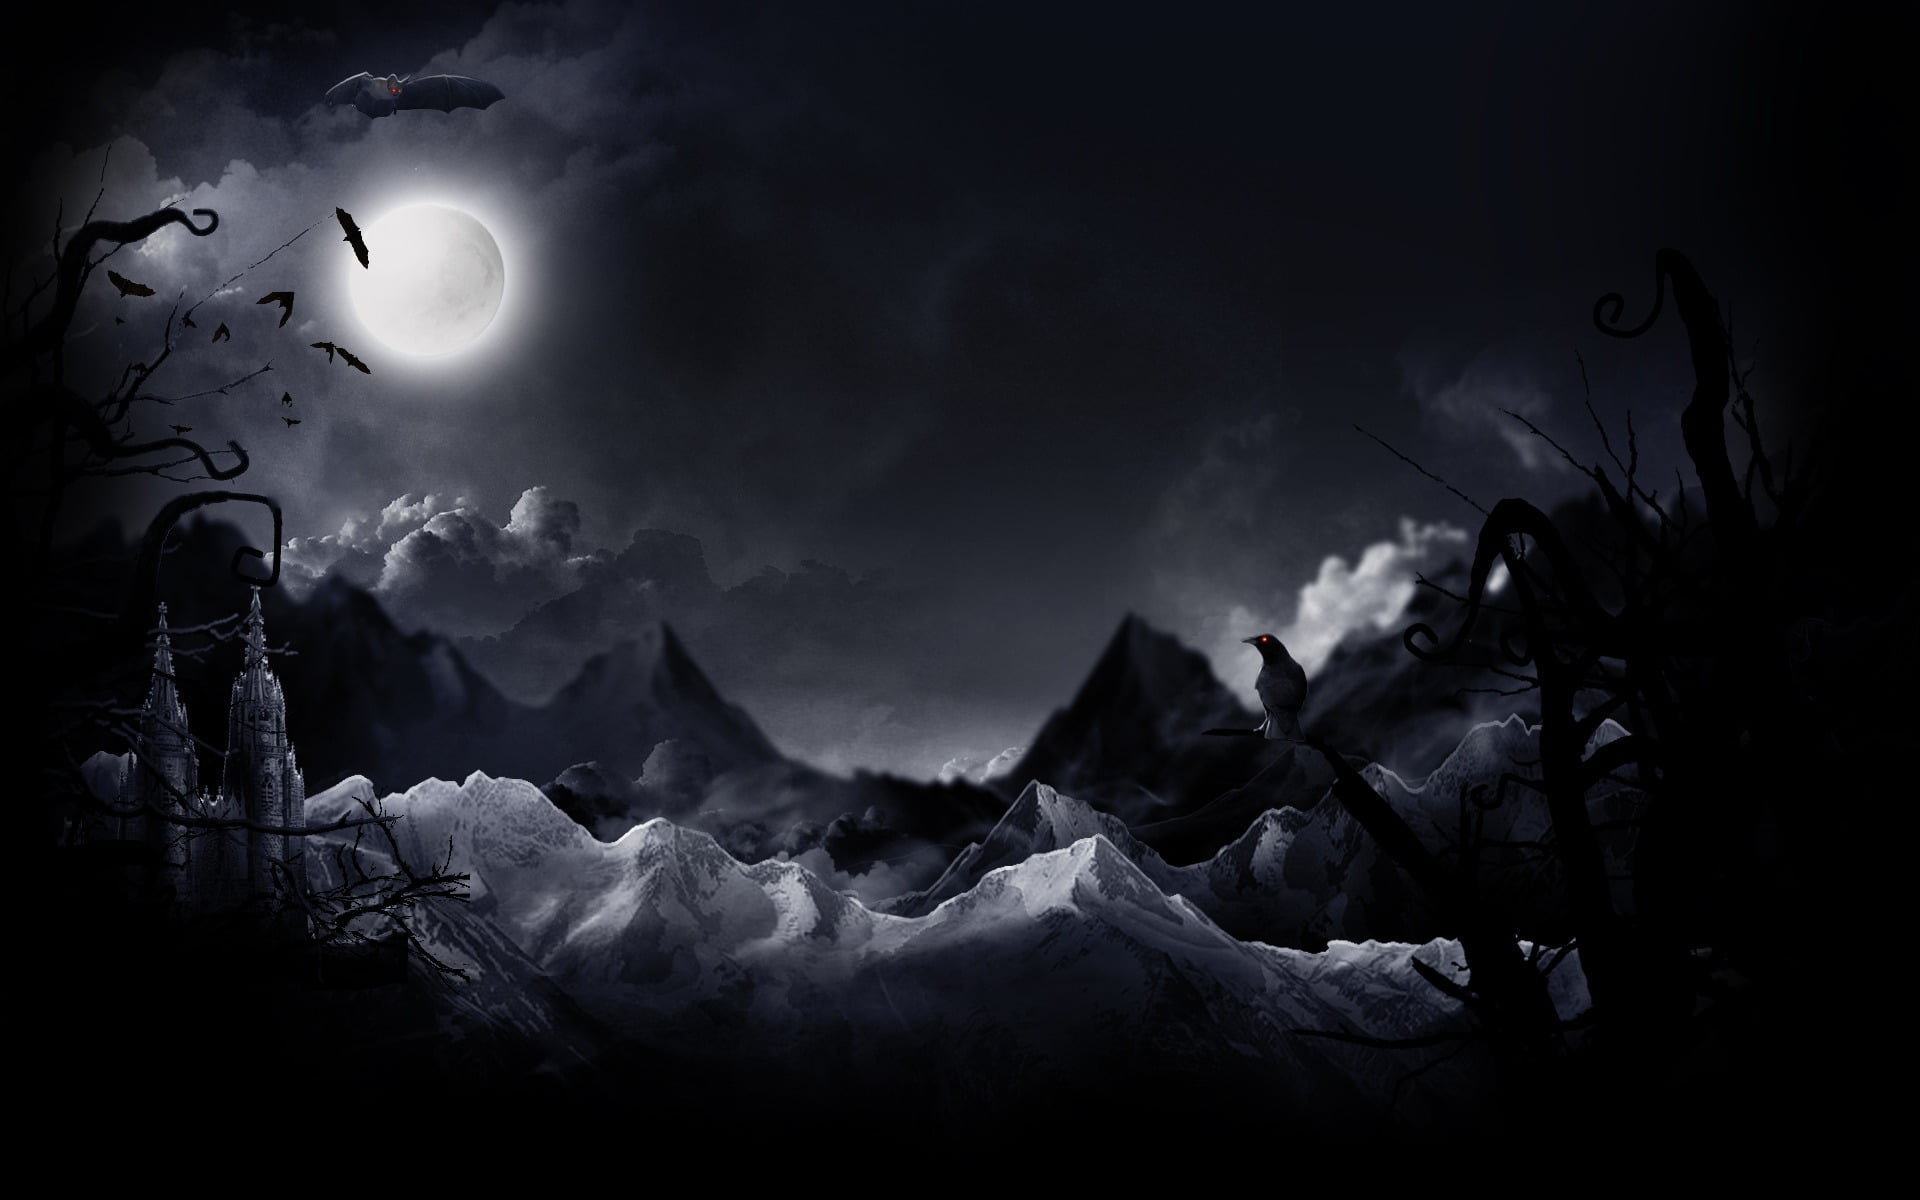 Artistic, Night, Bat, Castle, Cloud, Dark, Moon, Raven, full moon